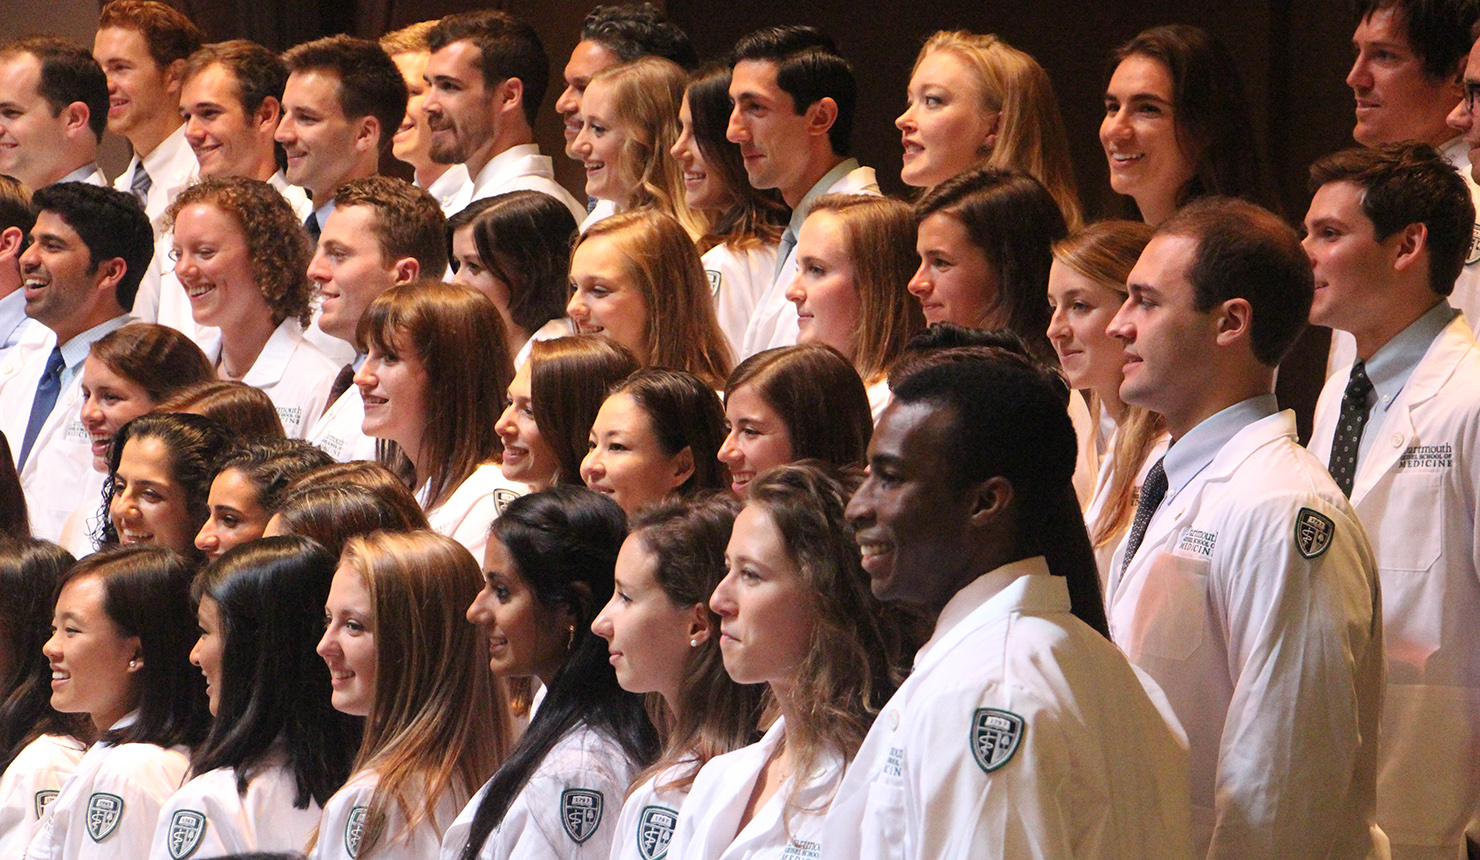 White Coat Ceremony Marks Milestone for Class of 2020